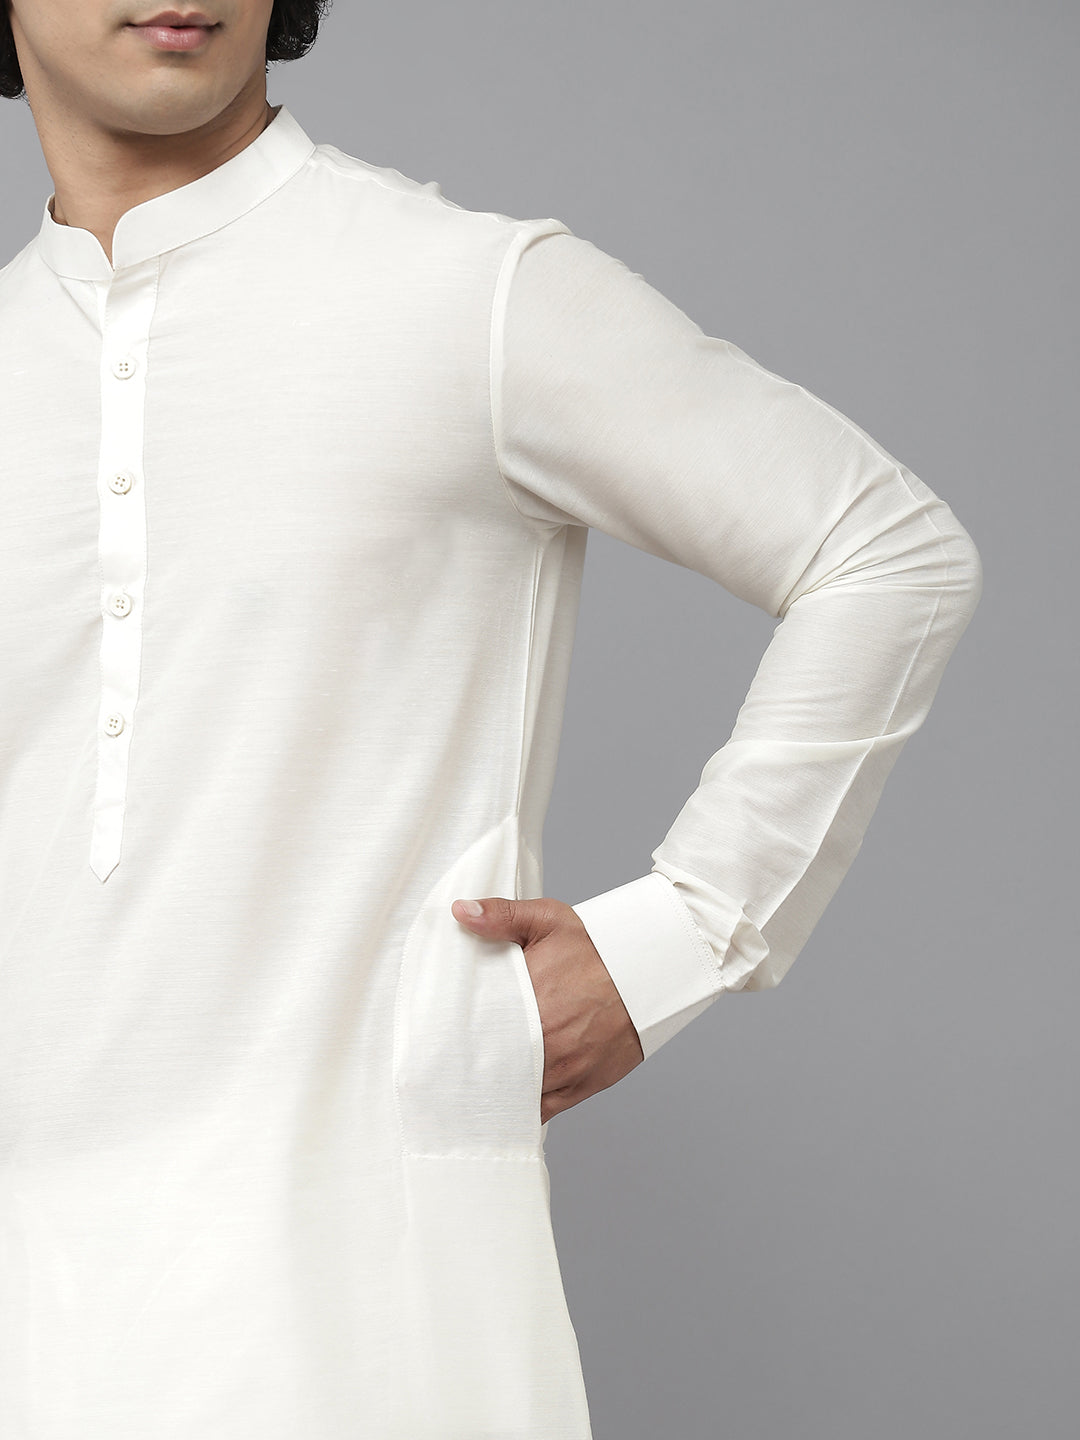 Buy Men's Off-White Silk Jacquard Woven Design Kurta Pajama Jacket Set Online - Zoom Out